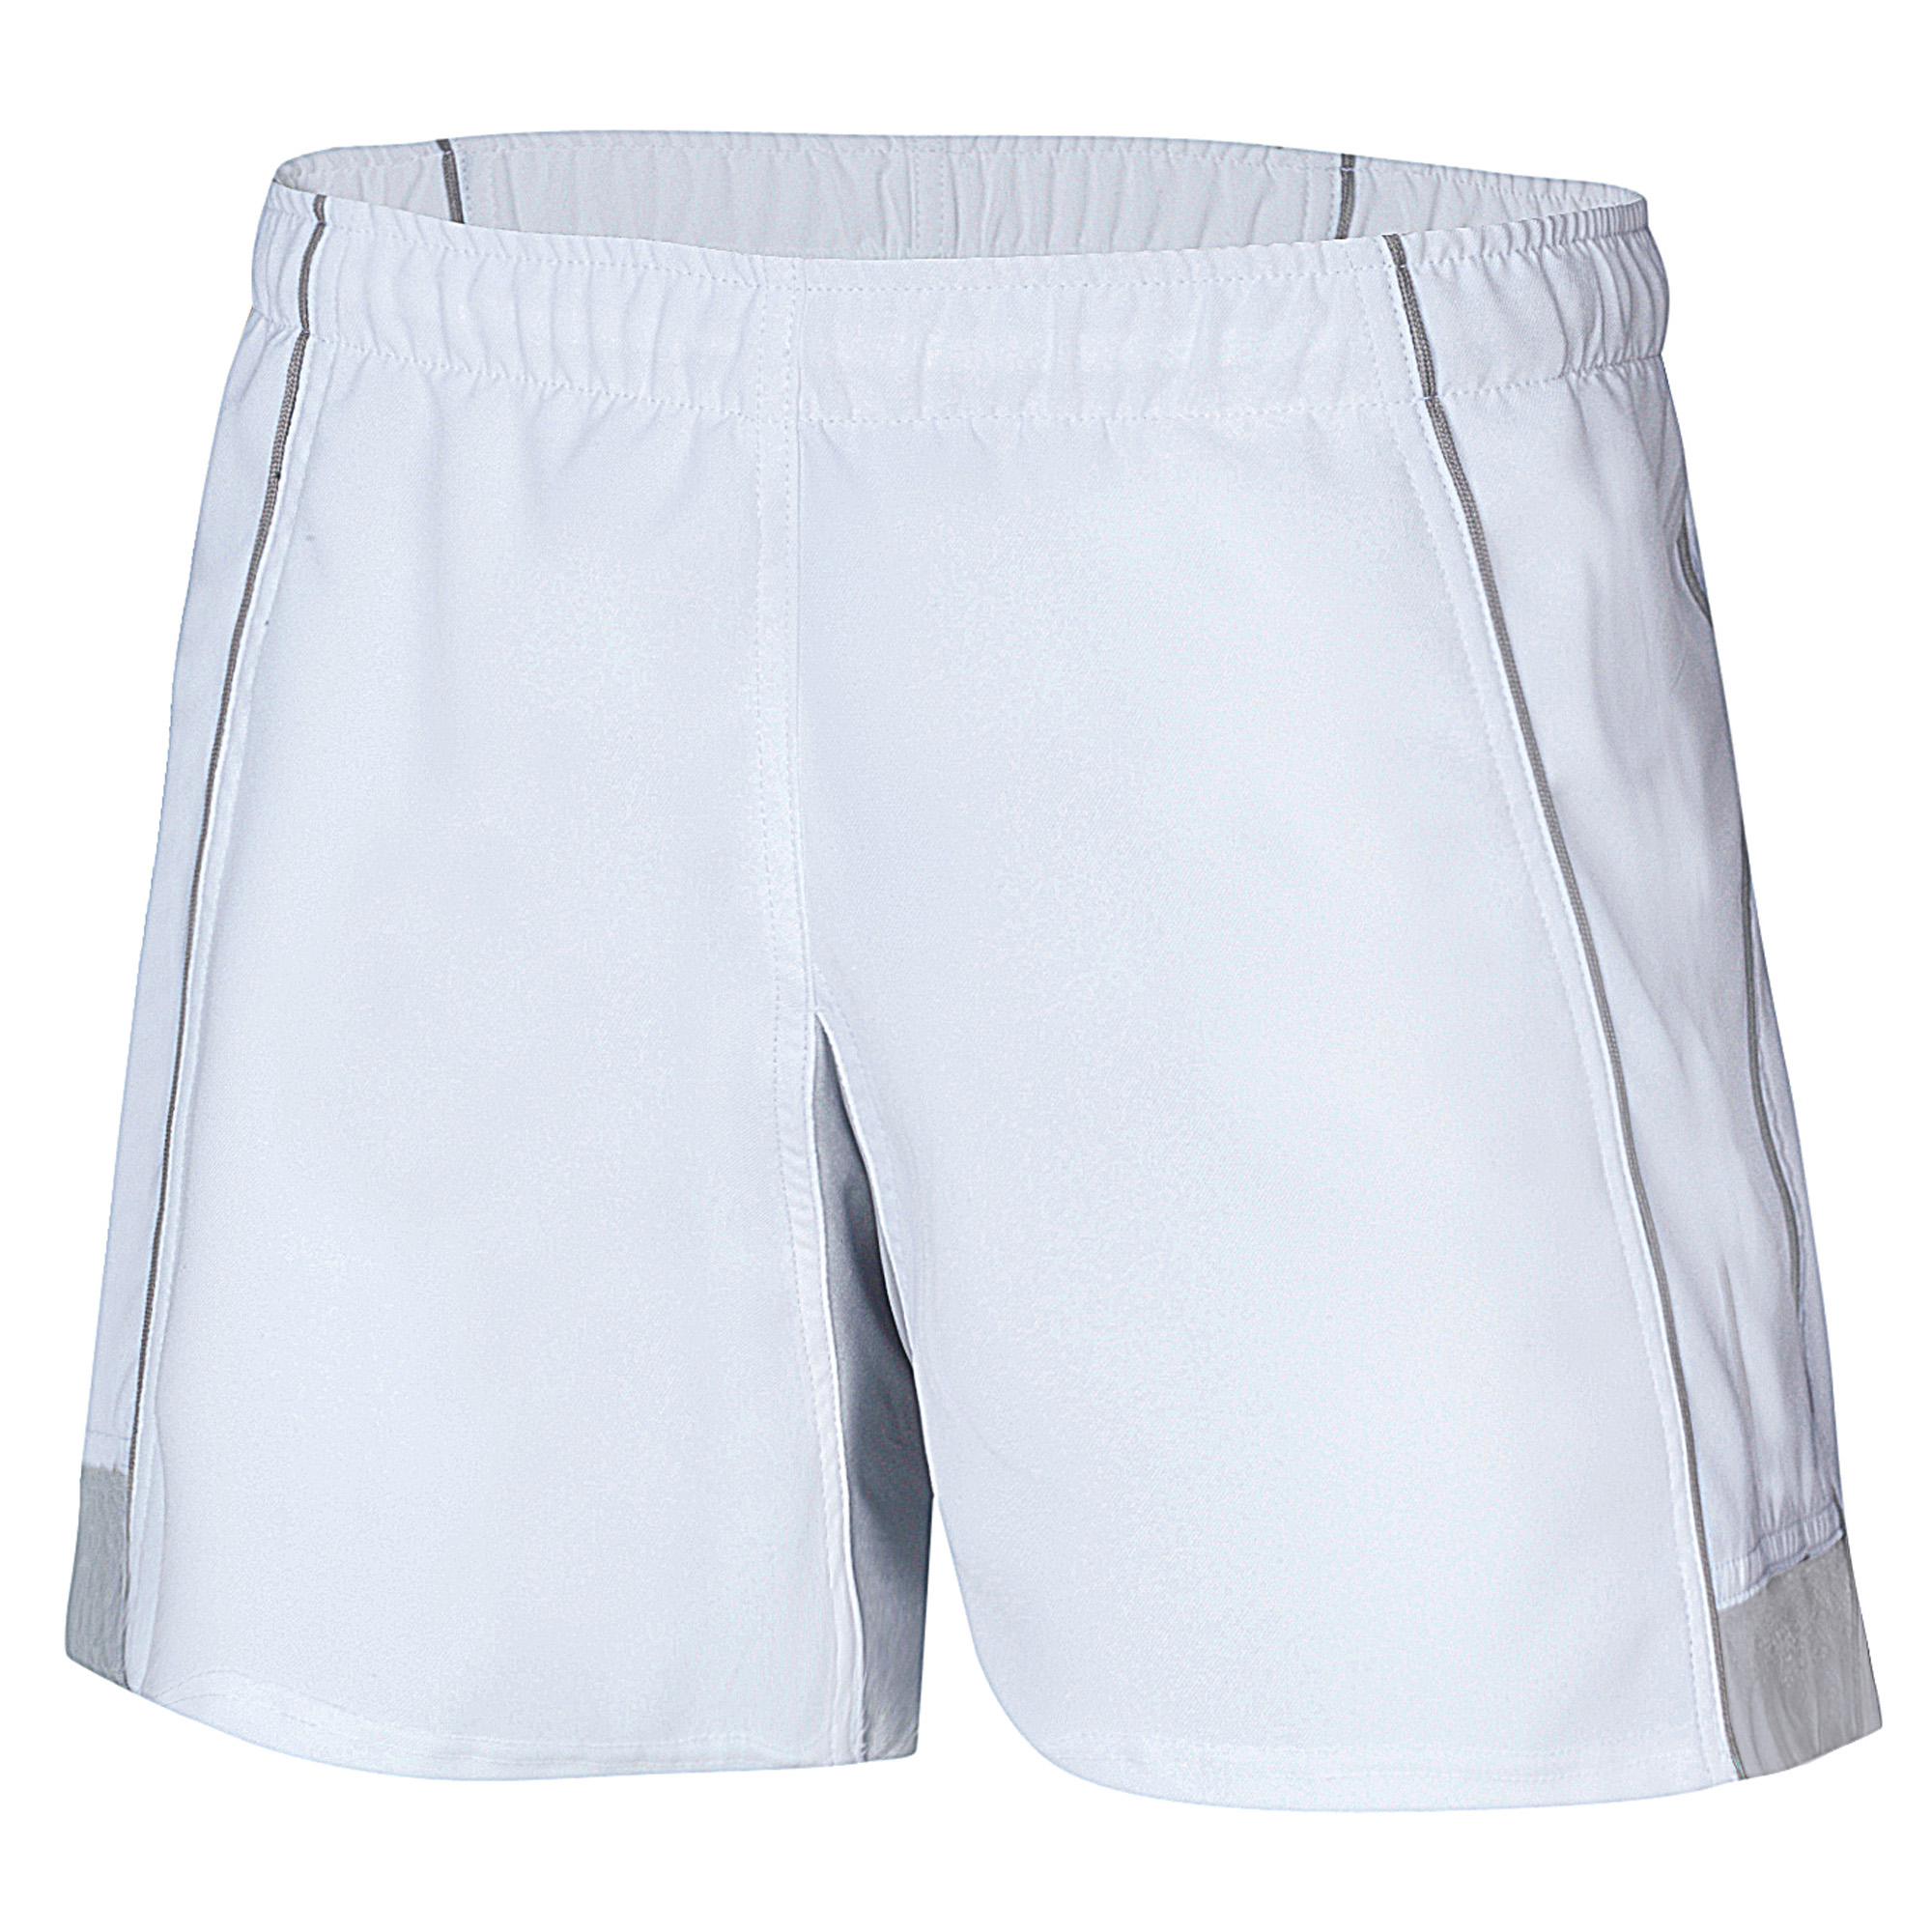 Grubber Shorts - Leeside Sports